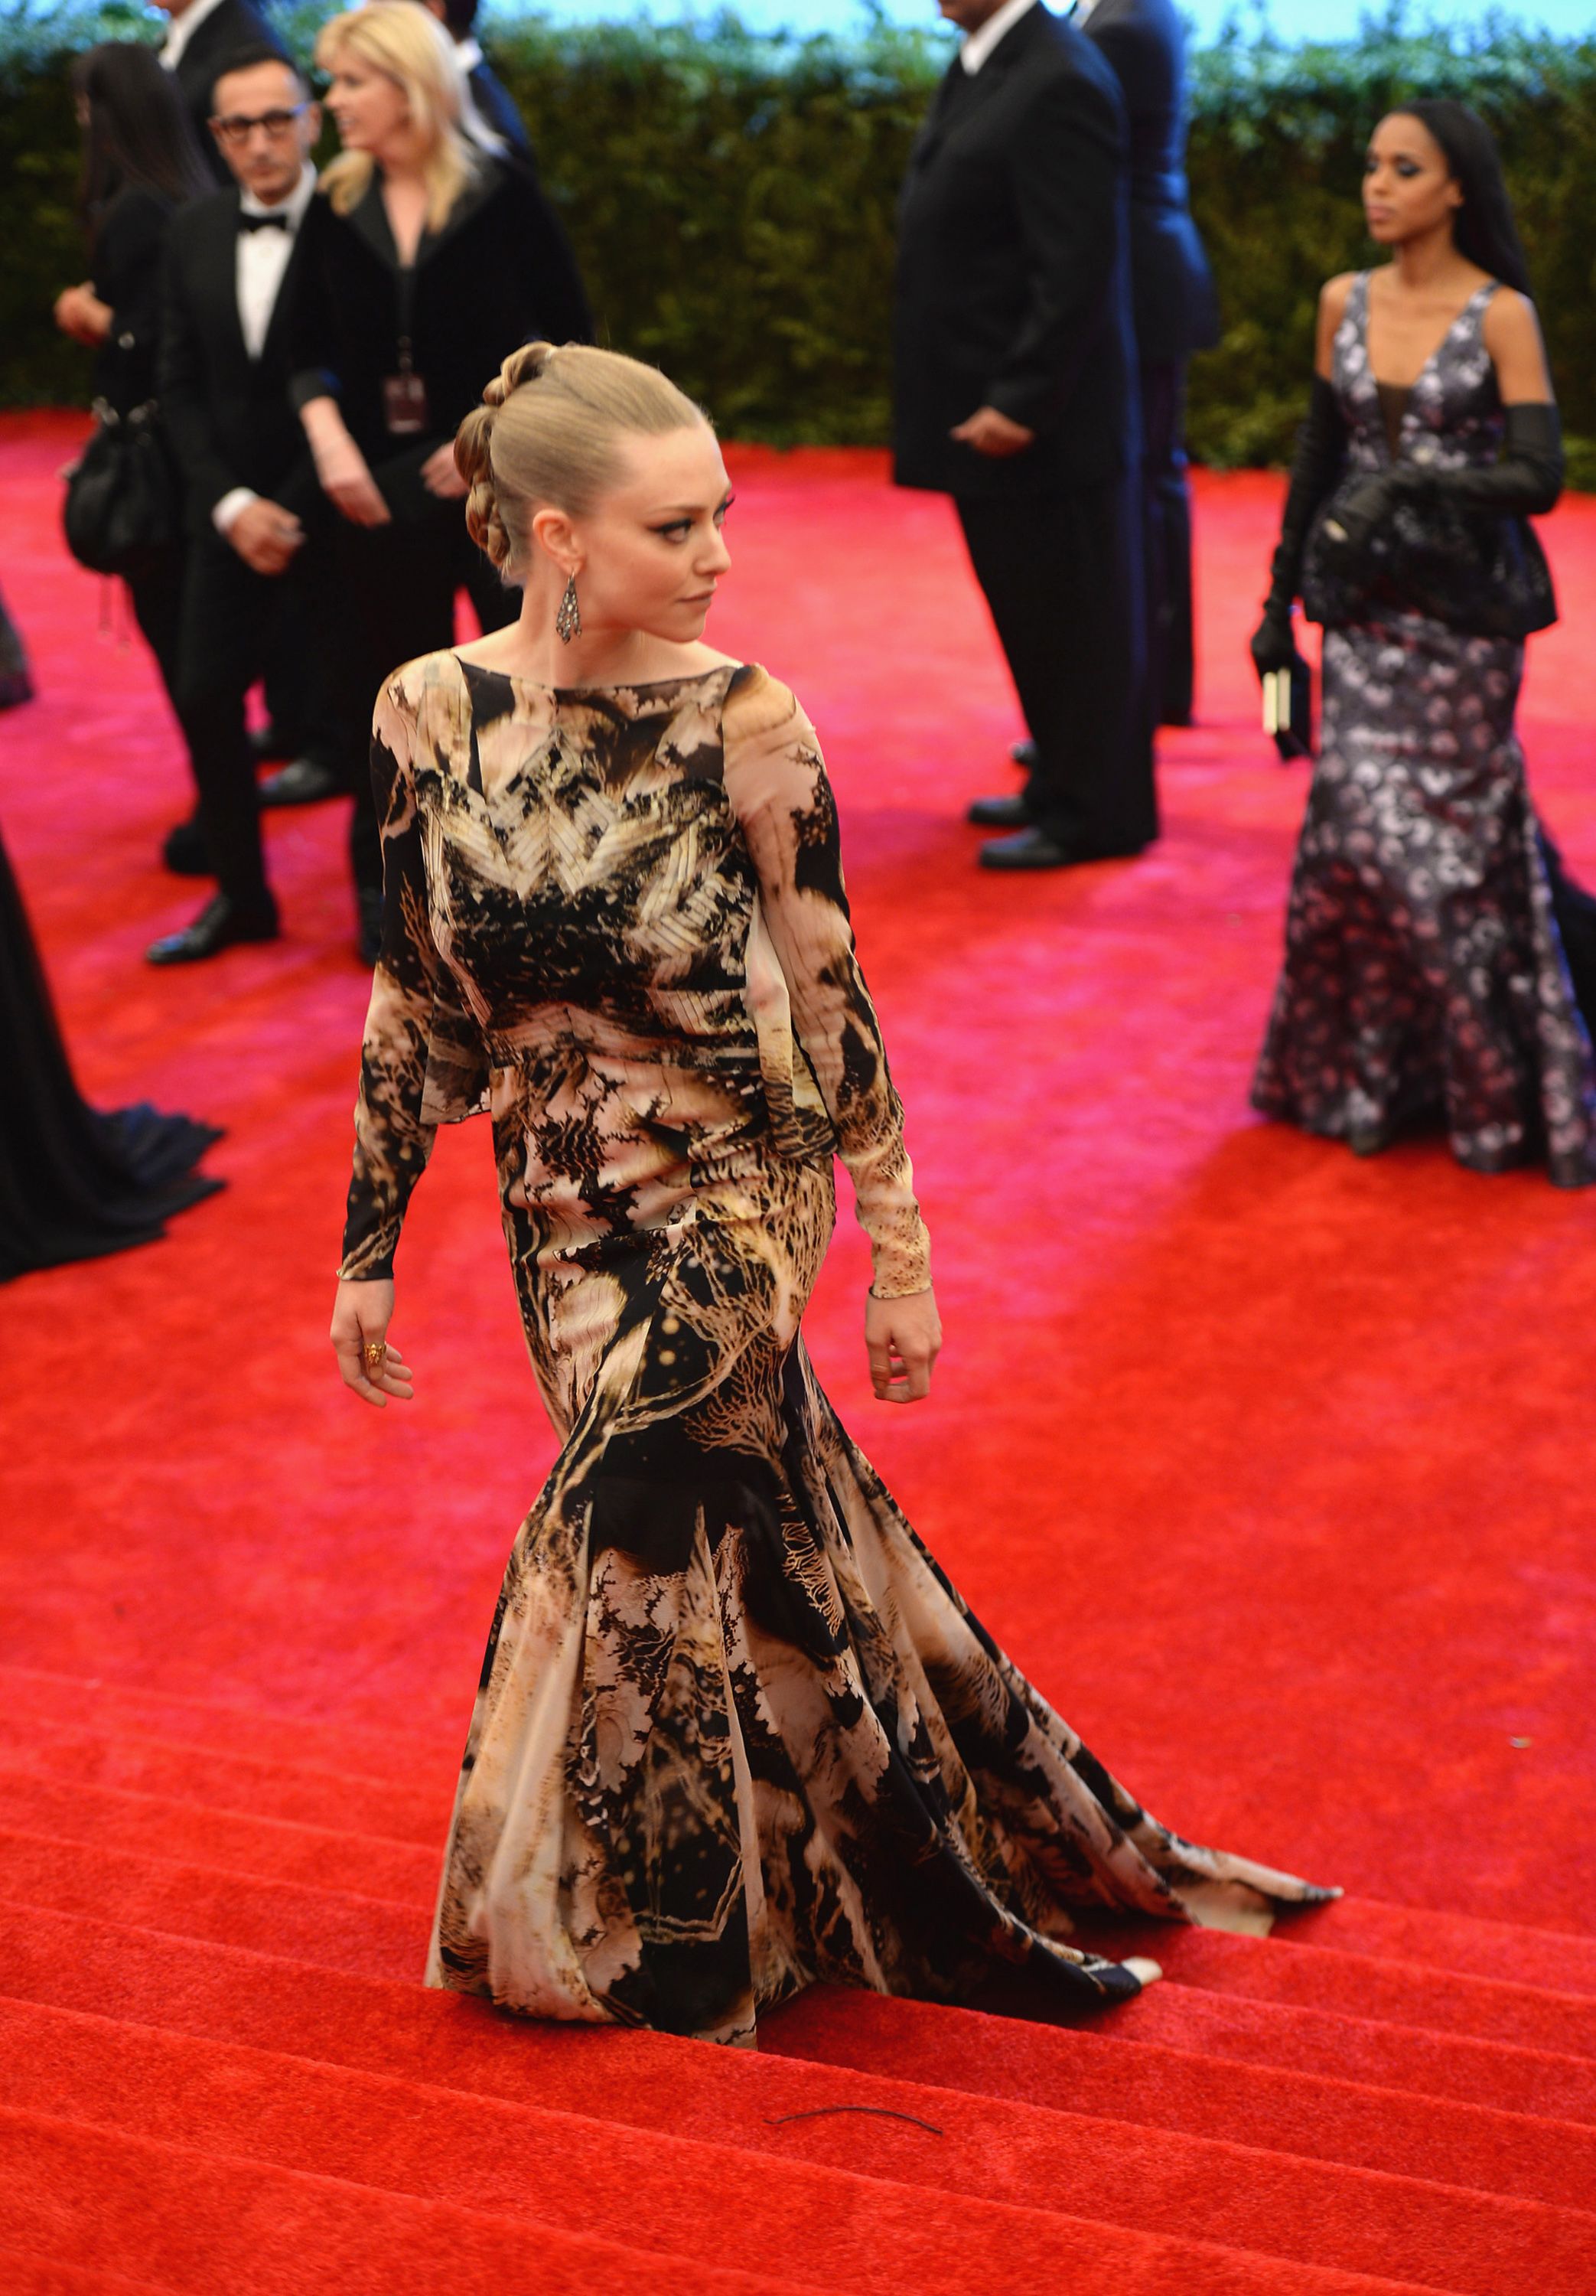 Amanda Seyfried Shines in Gold Chain Dress on Met Gala Red Carpet